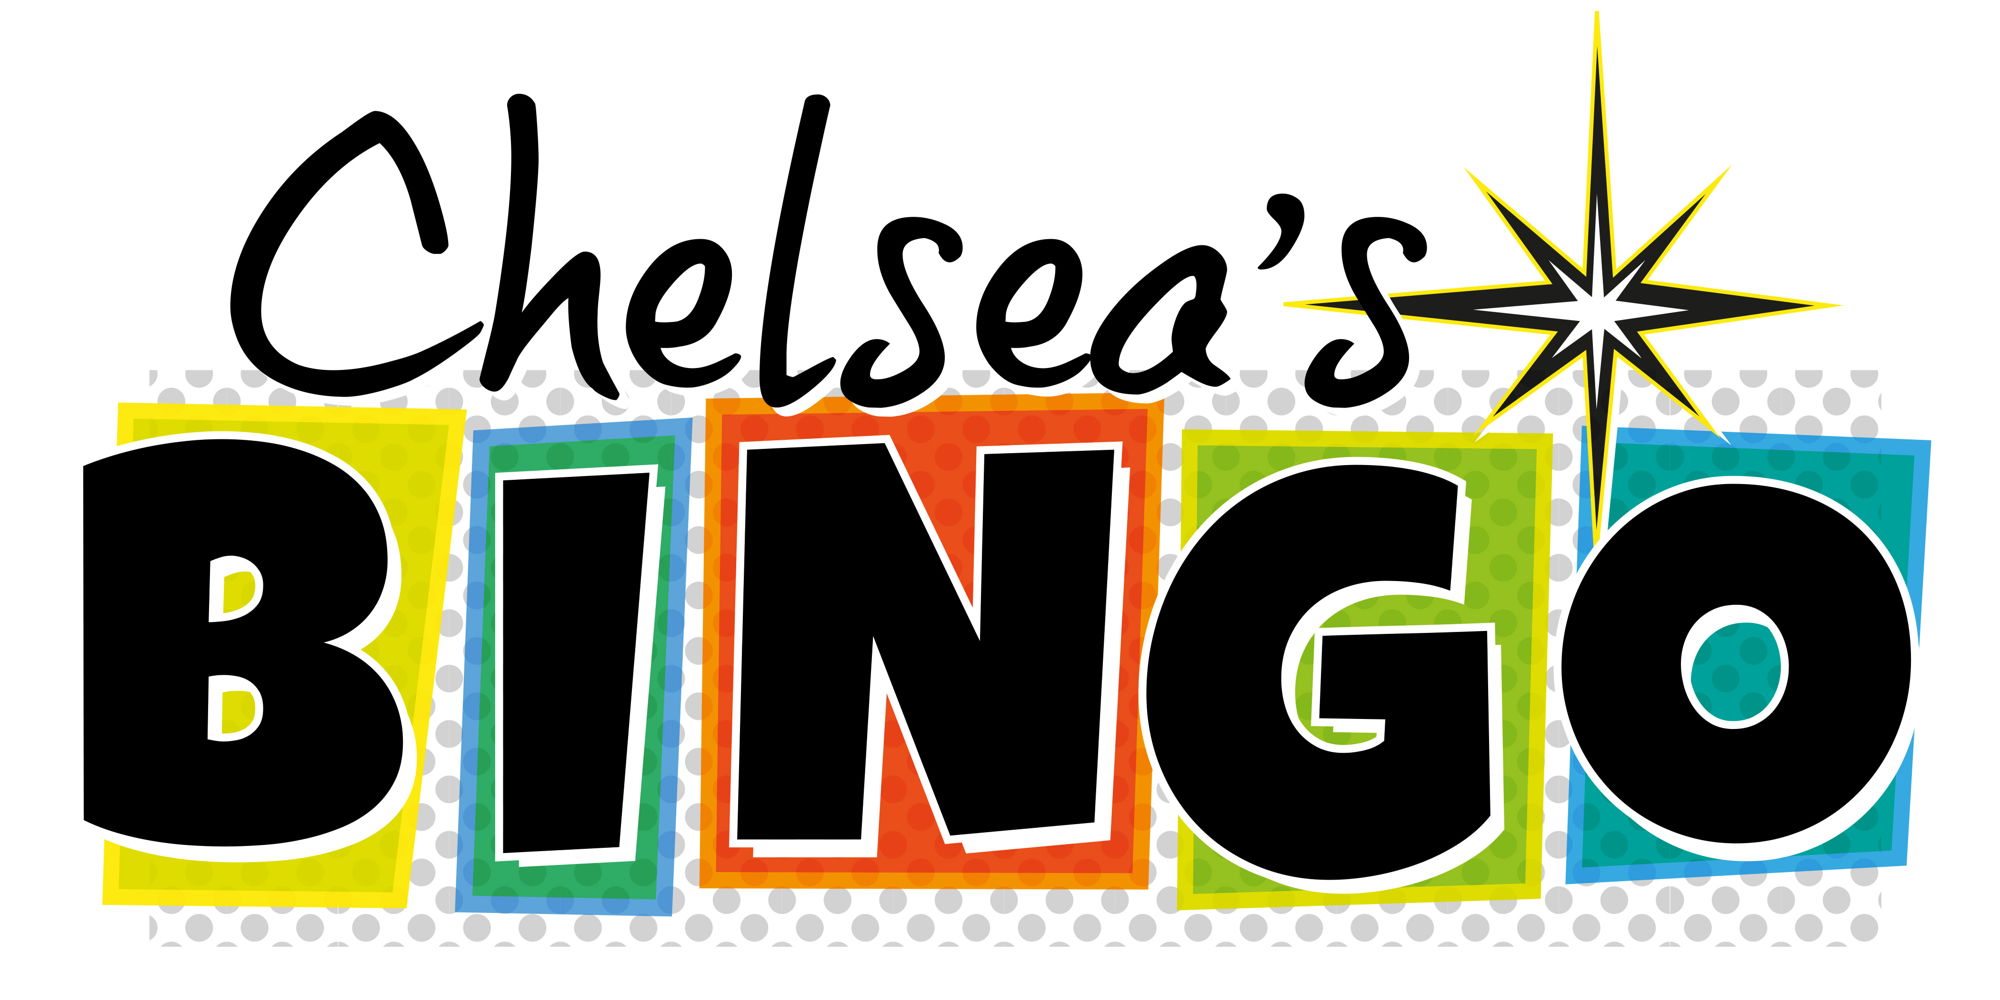 Chelsea's Bingo - Sunday Evenings promotional image